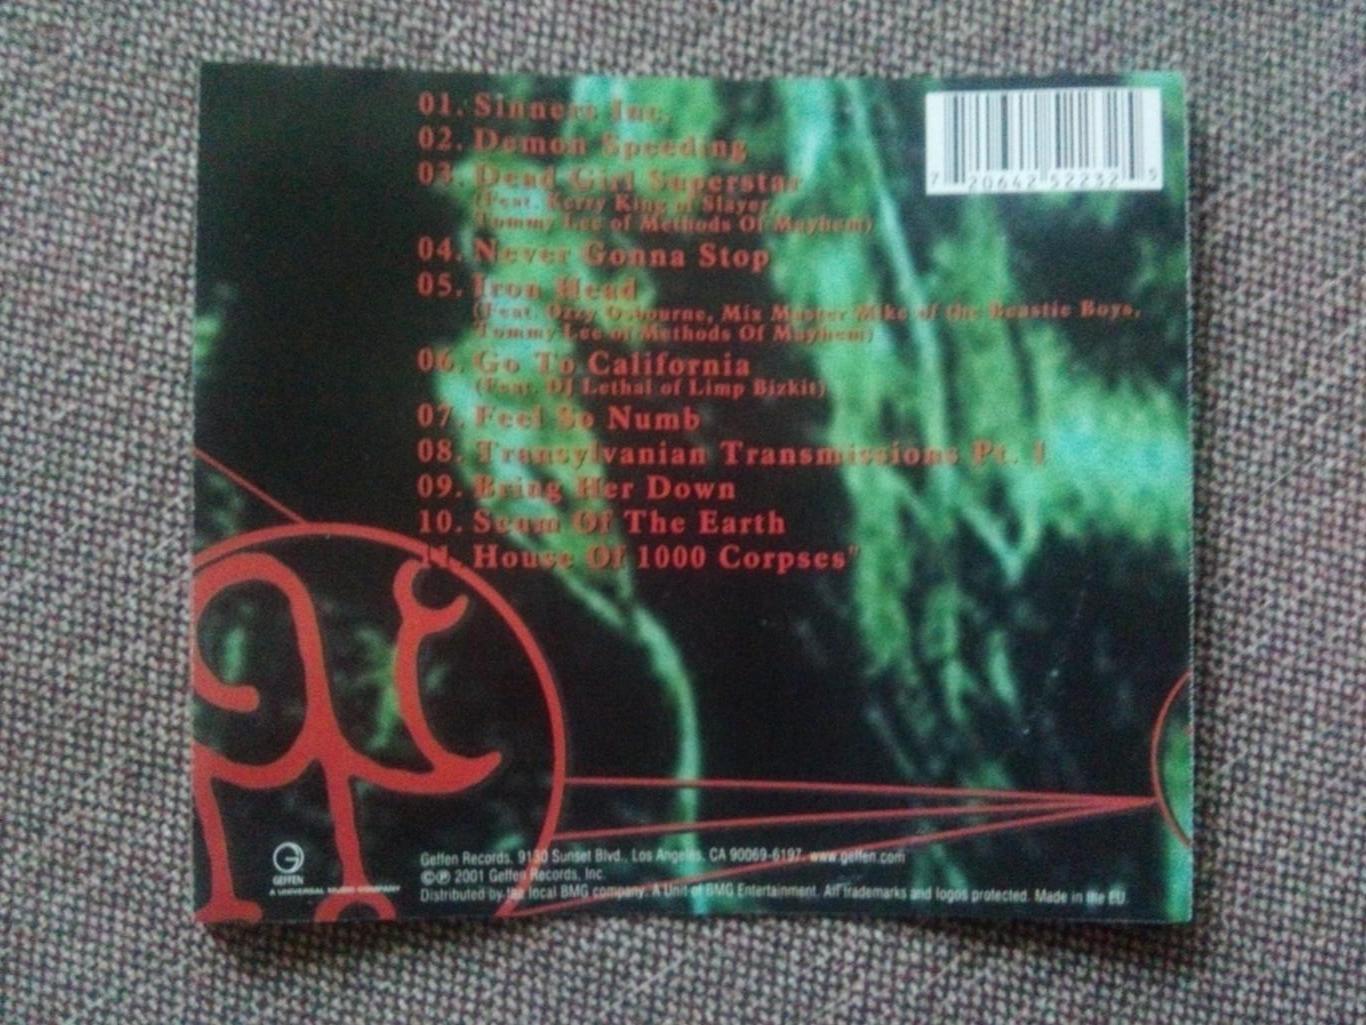 ГруппаRob Zombie-The Sinister Urge(студийный альбом 2001 г.) Рок 7